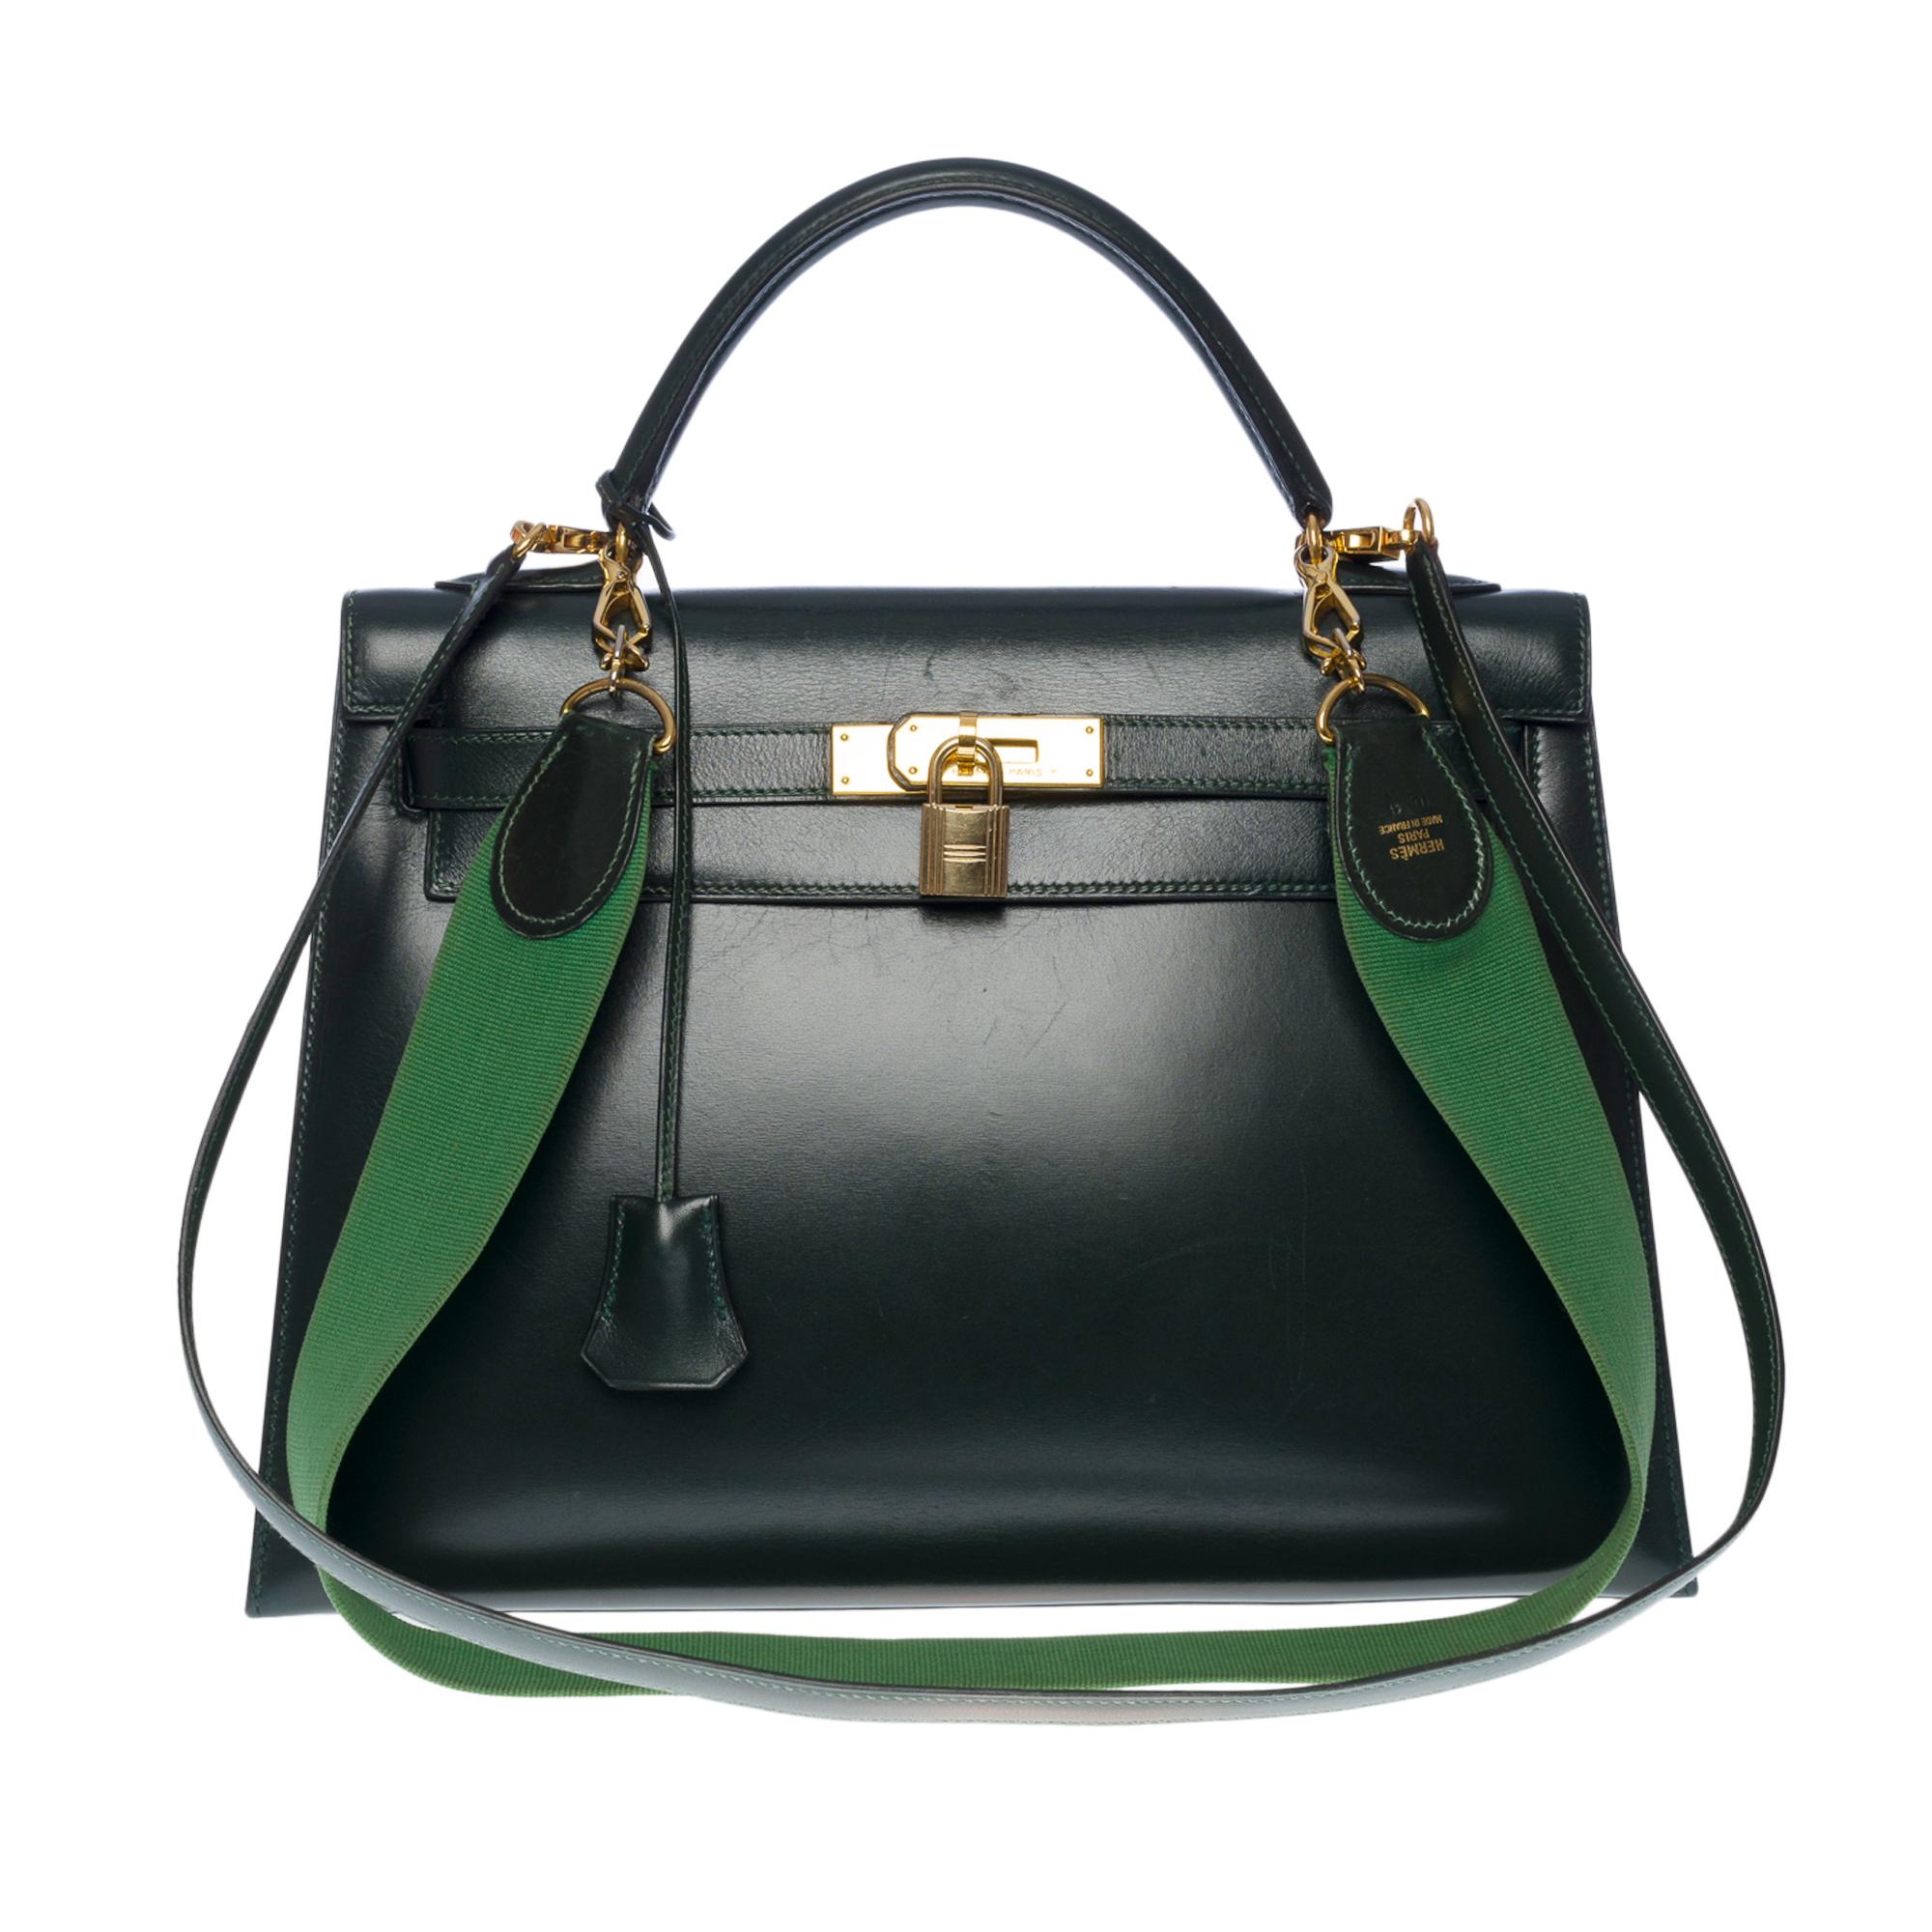 Noir Rare Hermès Kelly 32 sellier handbag double straps in green box calf leather, GHW en vente